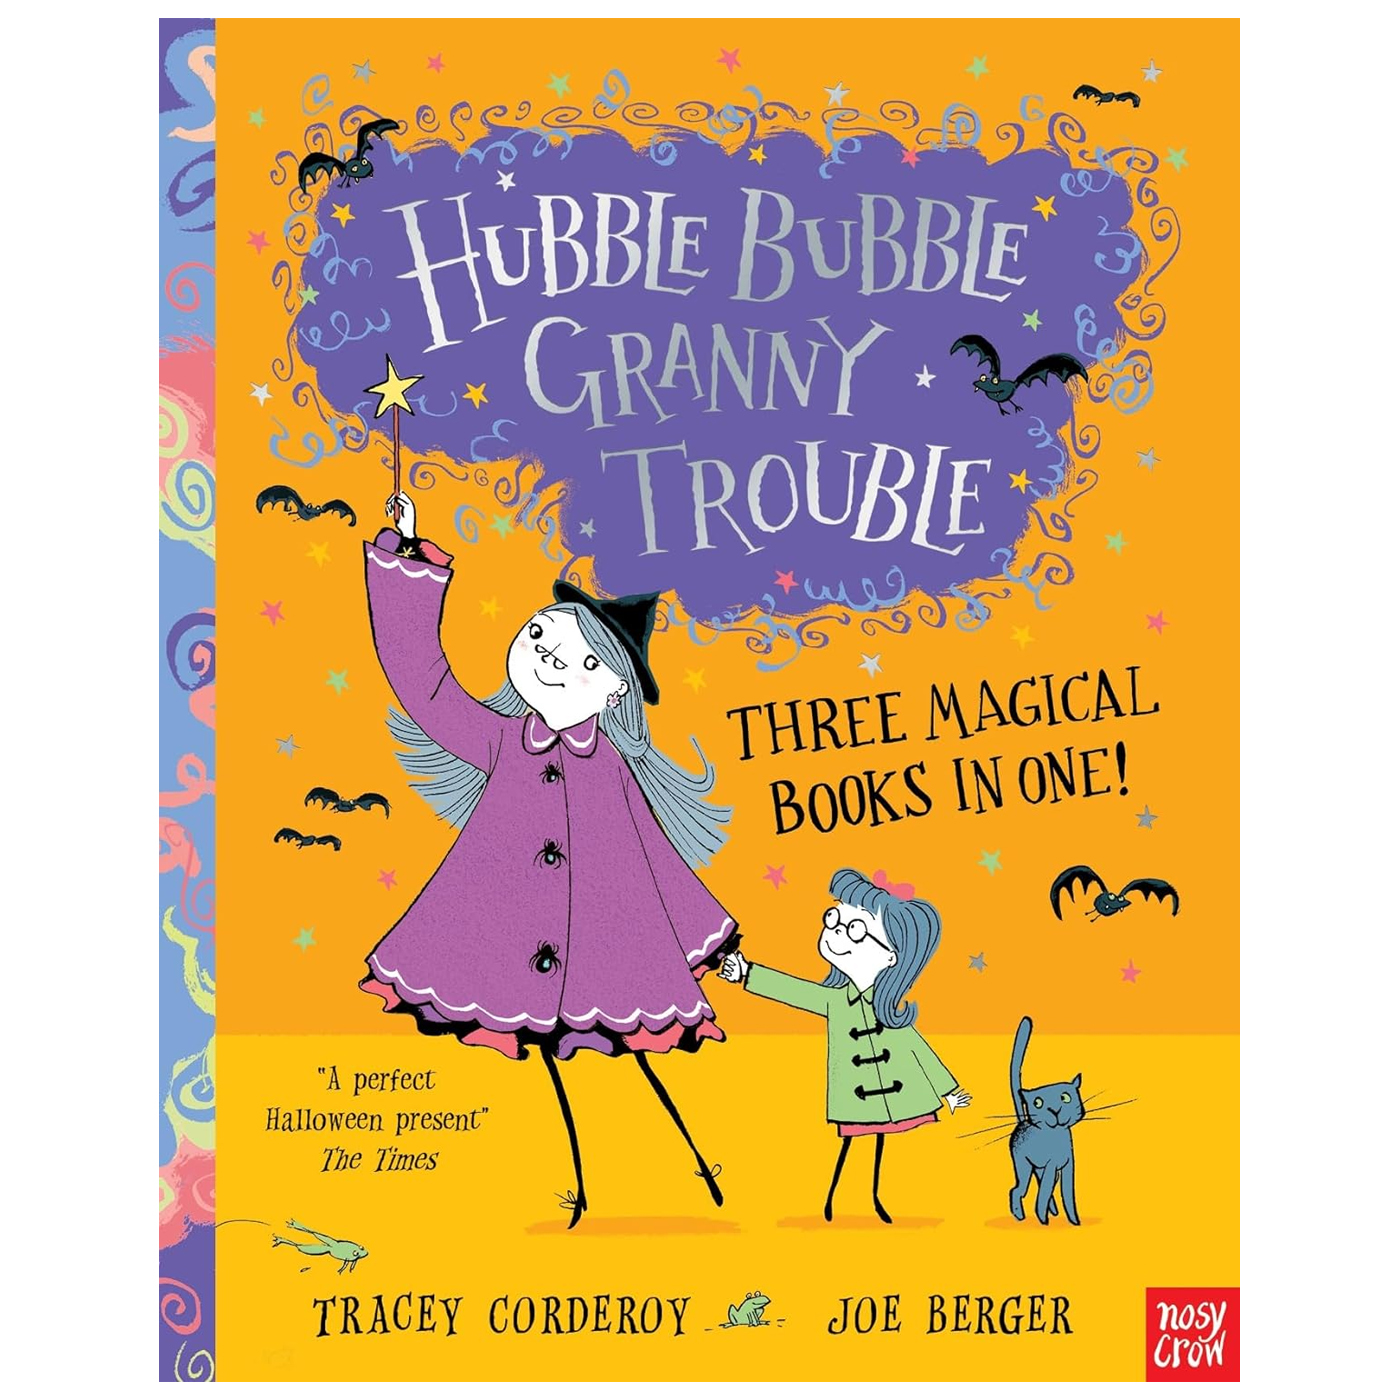  Hubble Bubble Granny Trouble